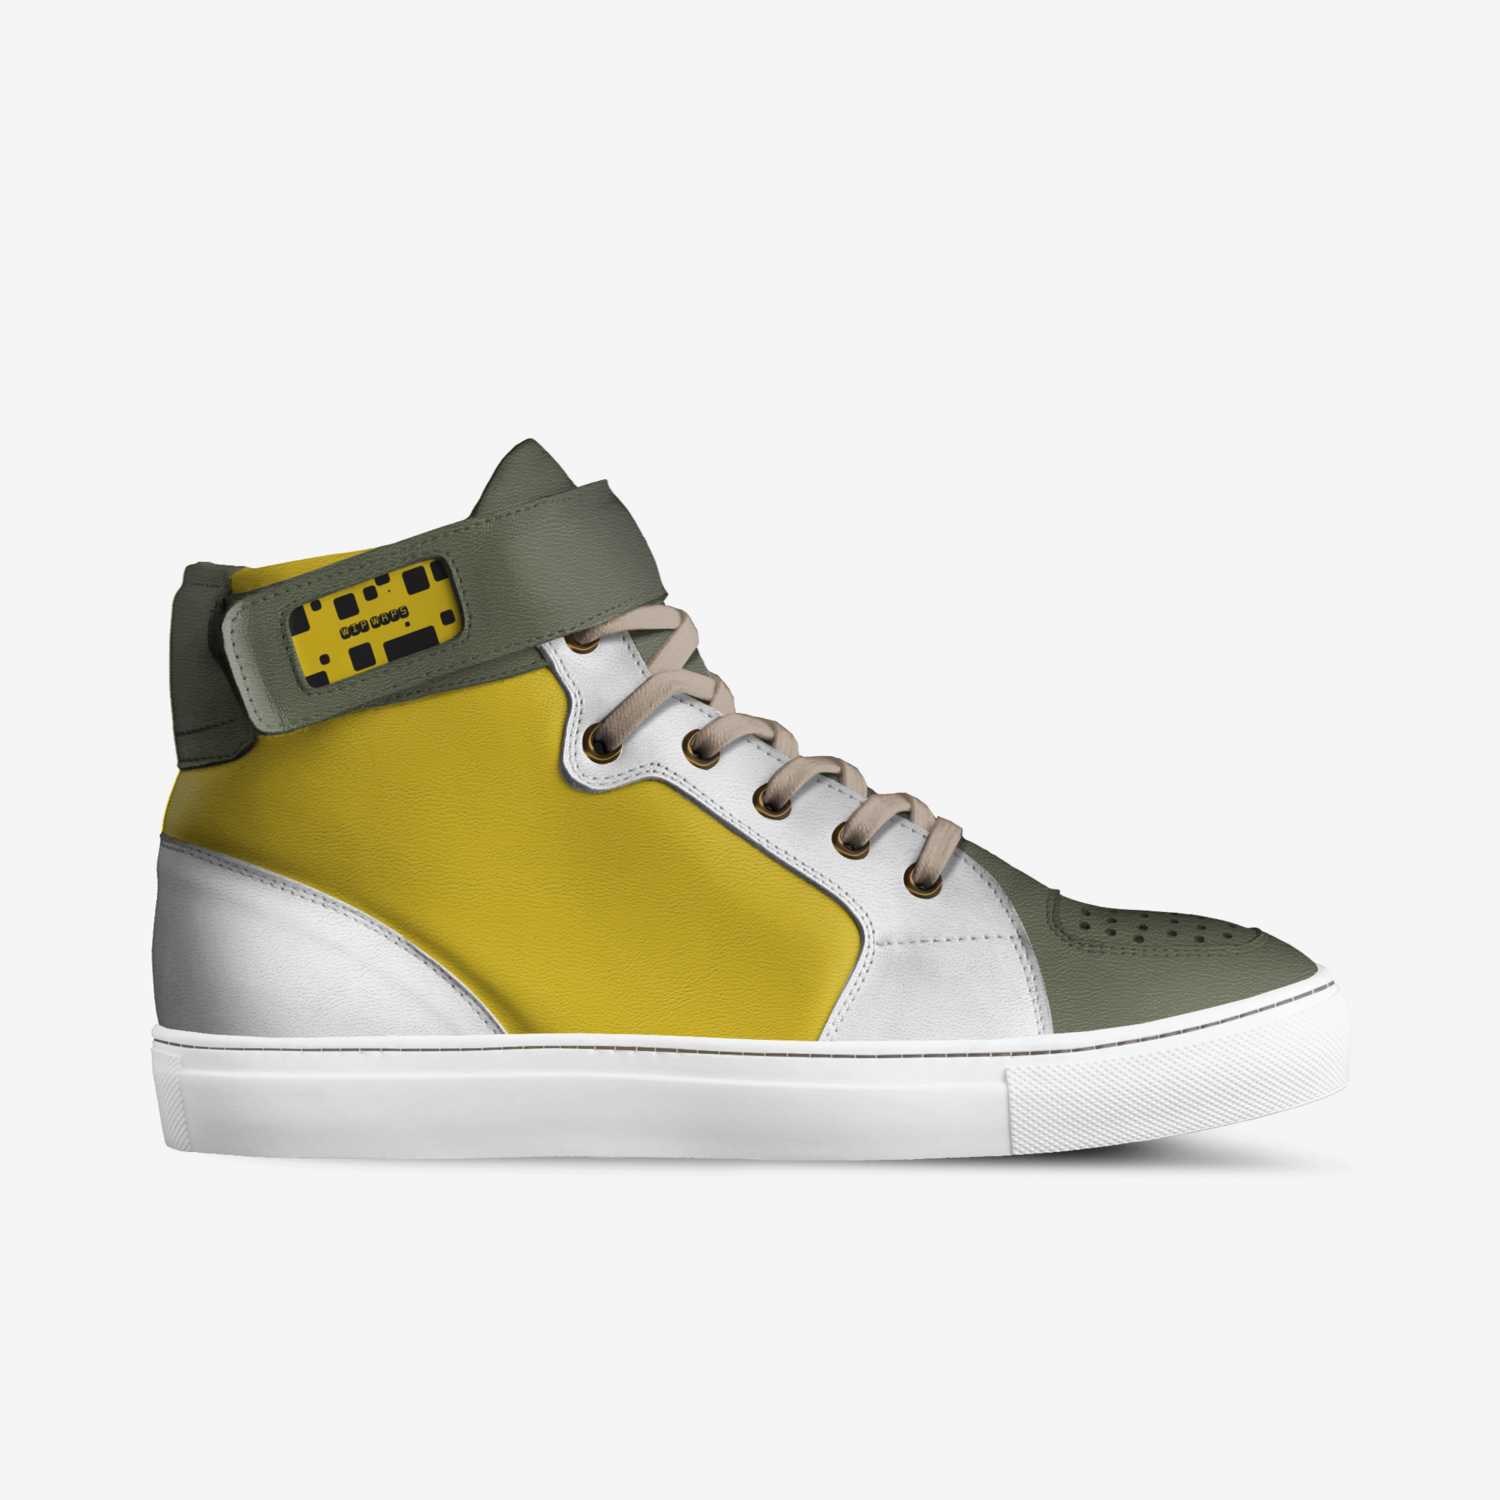 WIP WAPS | A Custom Shoe concept by Brandon Kyle